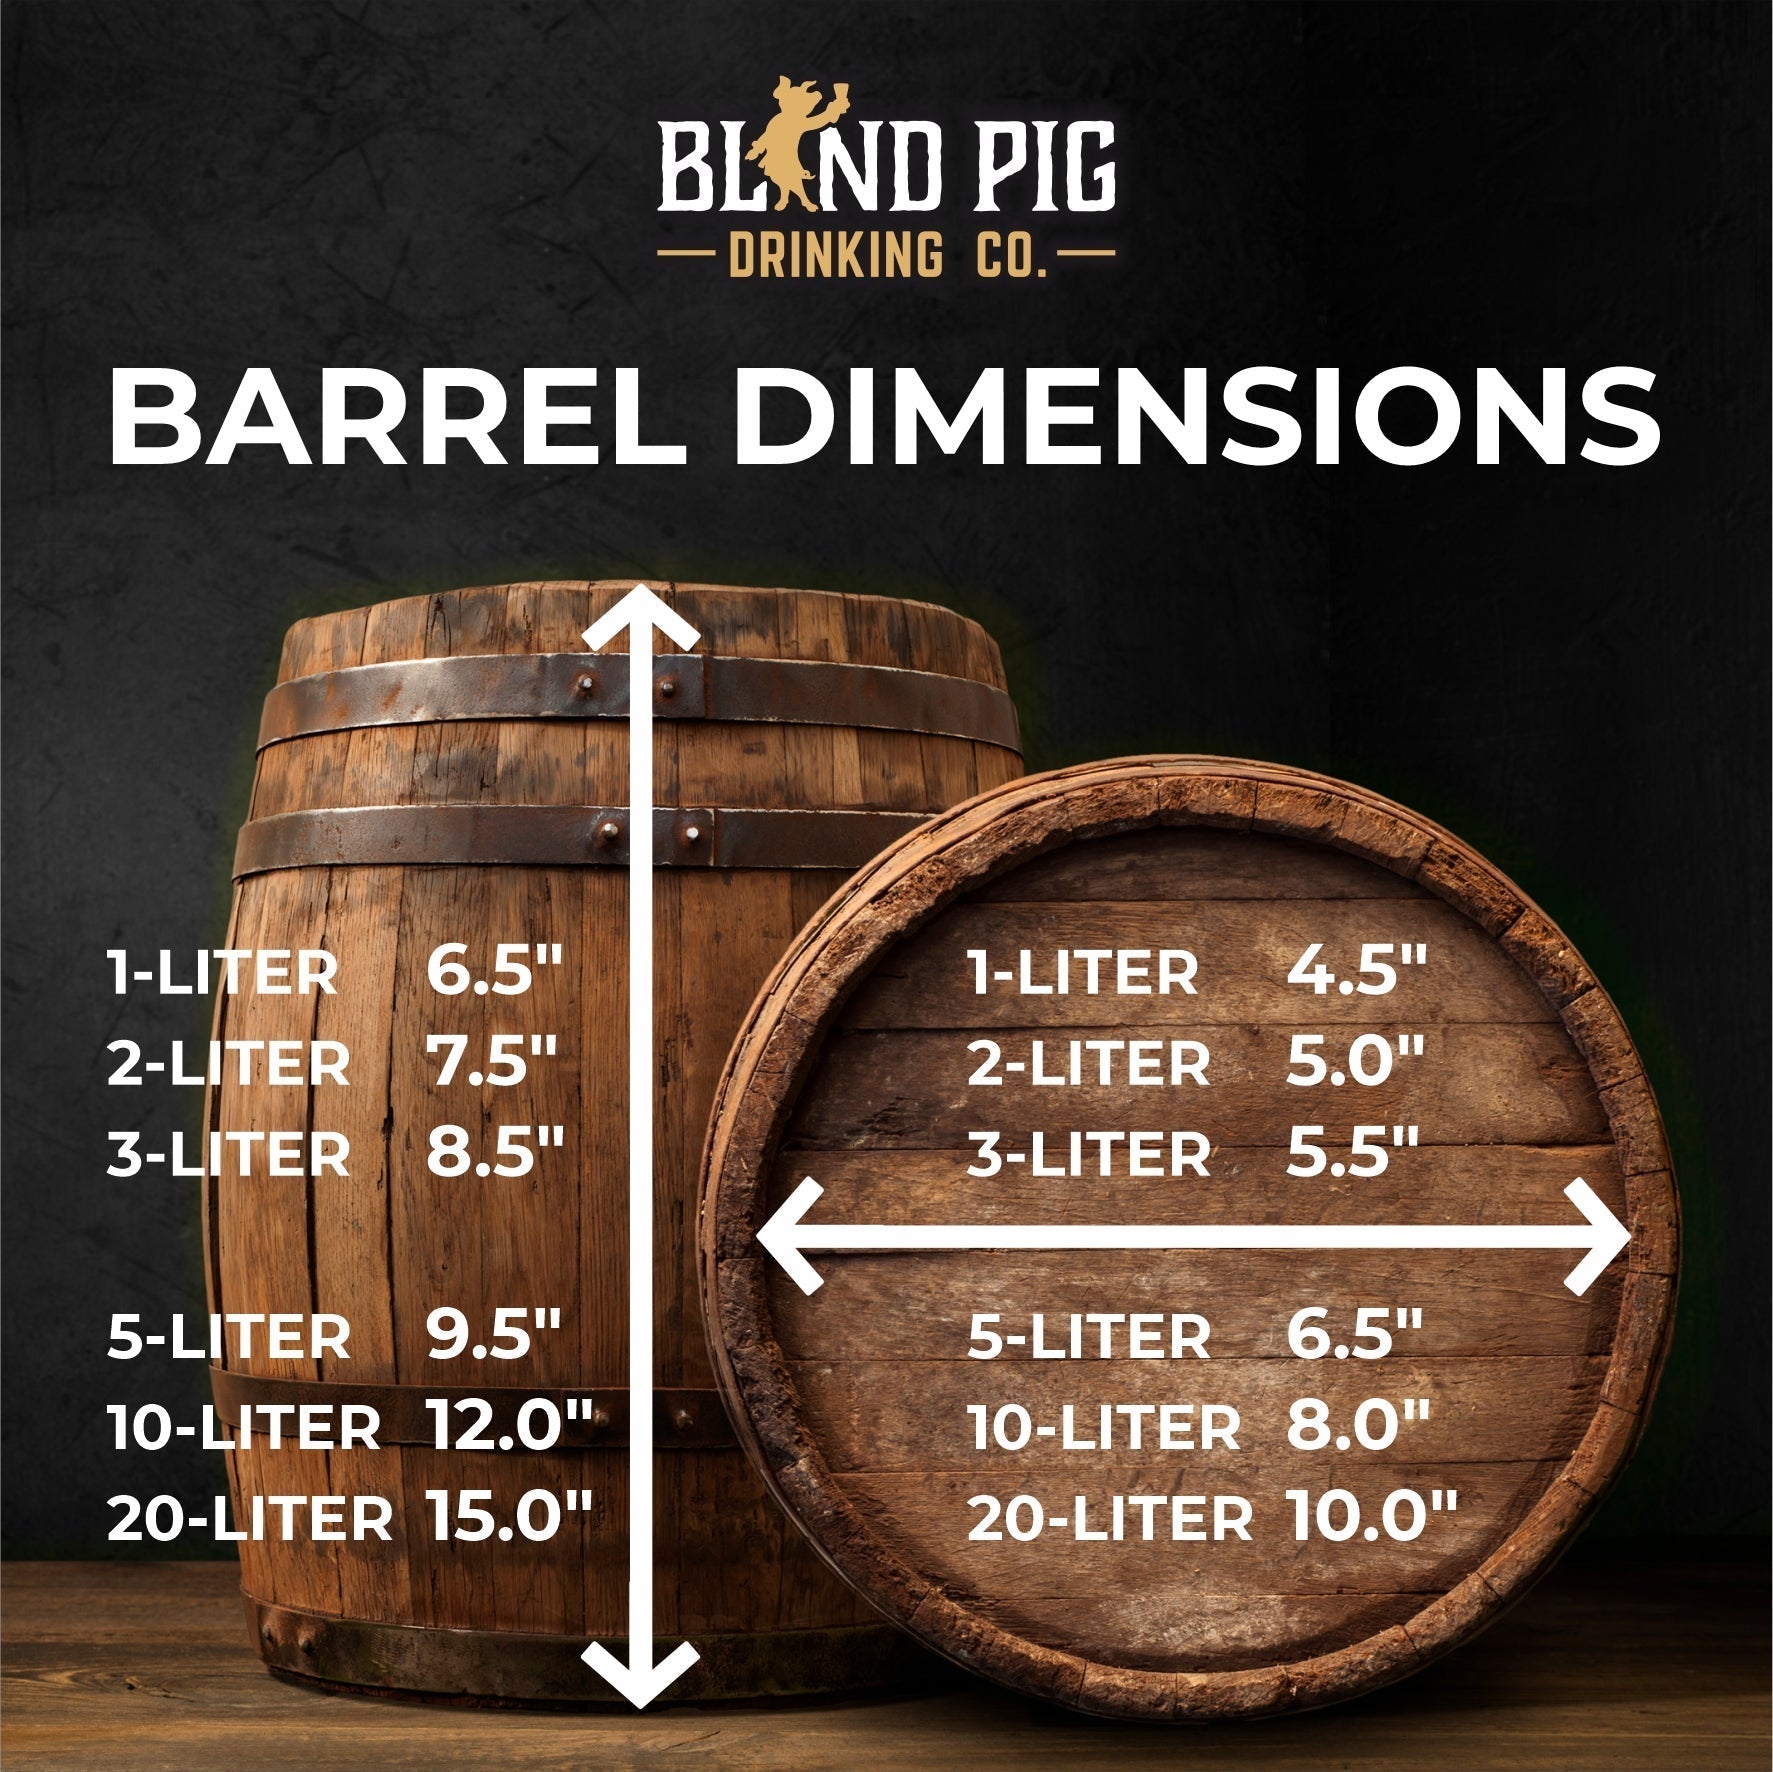 Personalized Irish Whiskey Barrel + Irish Whiskey Making Kit | The Home Distiller's Choice for DIY Spirits| Distilling Co. Series - Blind Pig Drinking Co.